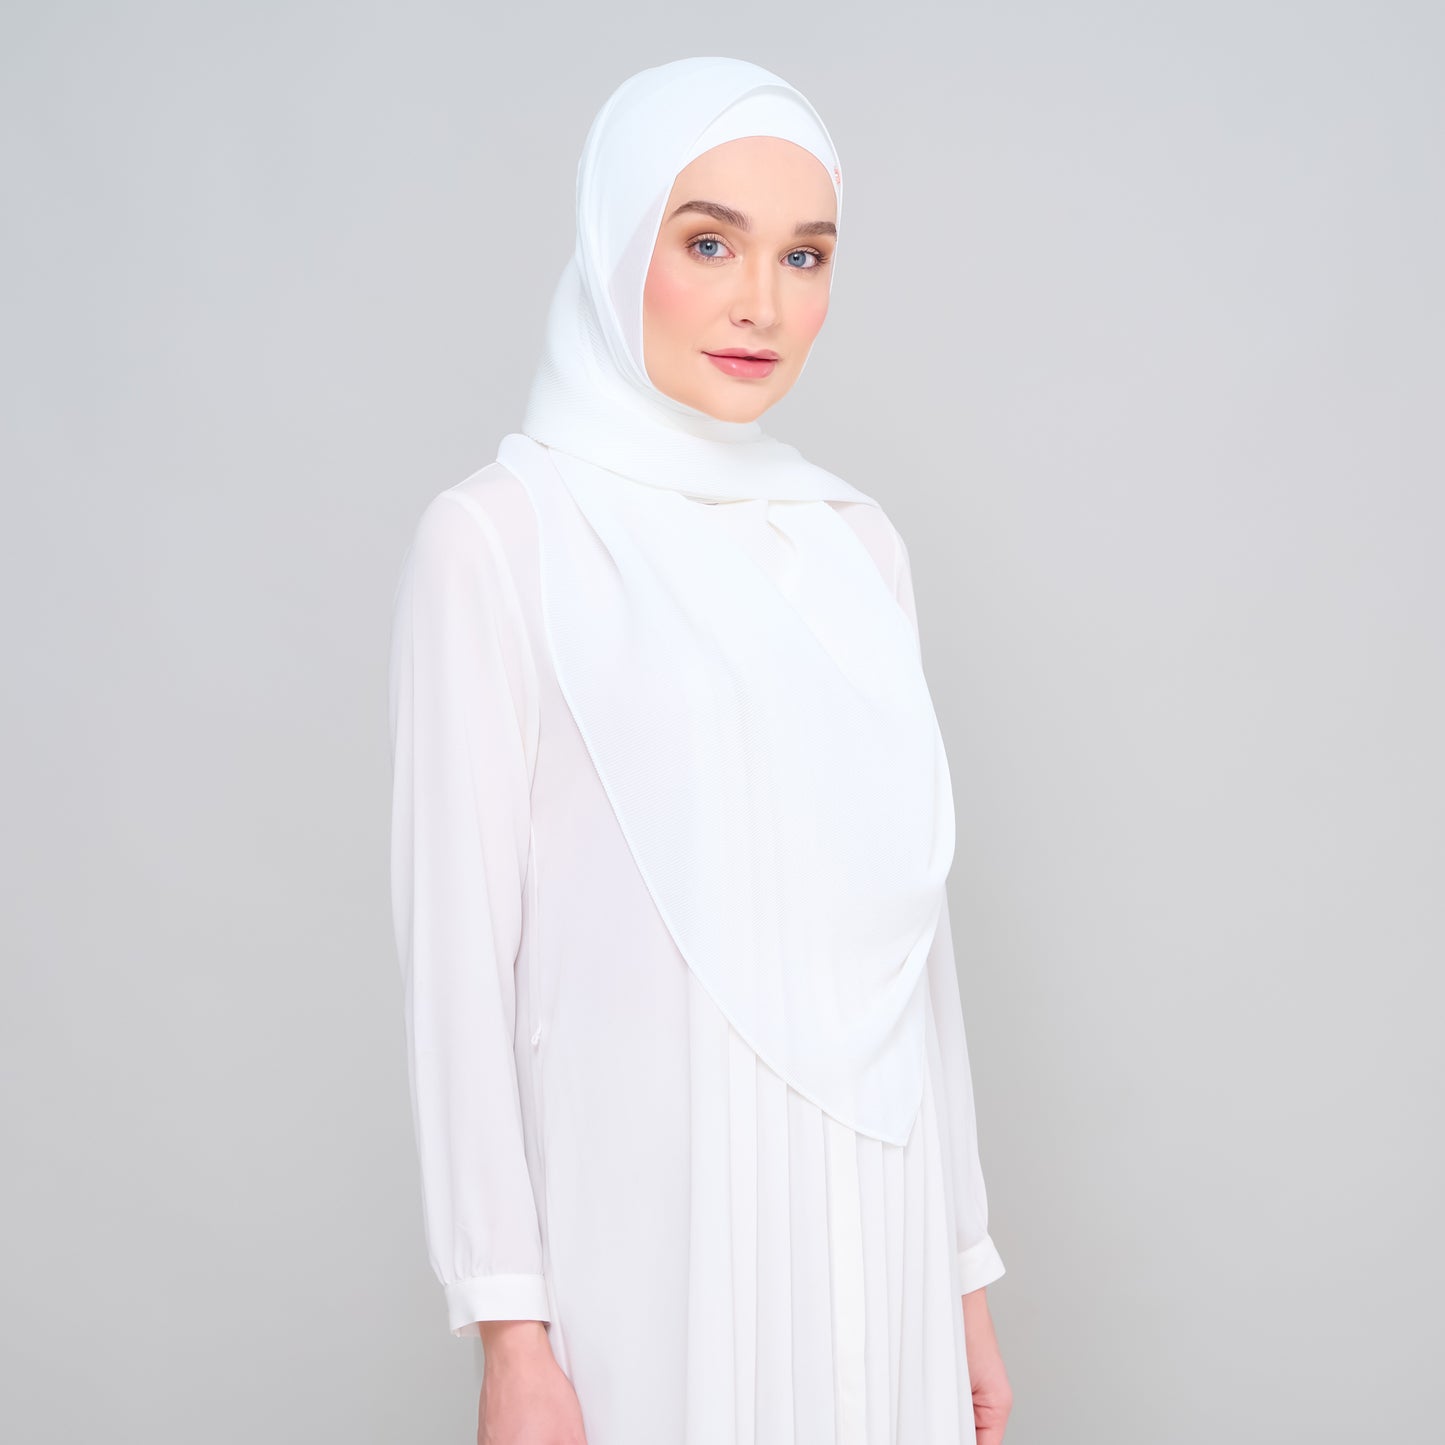 Zara Micropleats in Pure White